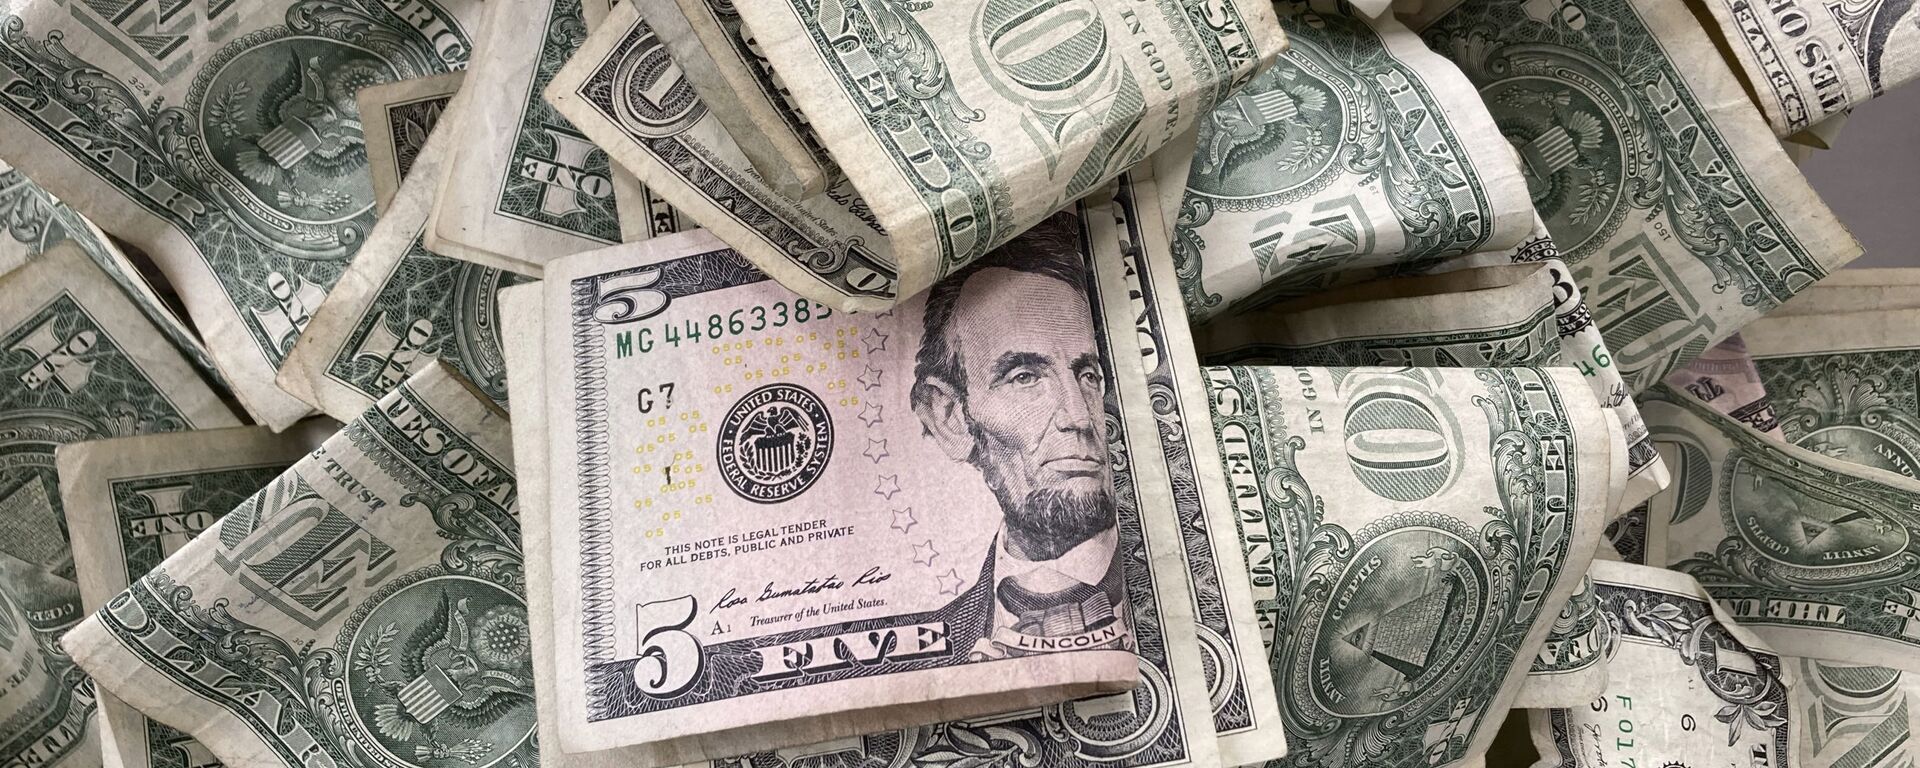 Dollar bills are deposited in a tip box, May 24, 2021 in New York. - Sputnik International, 1920, 10.12.2022